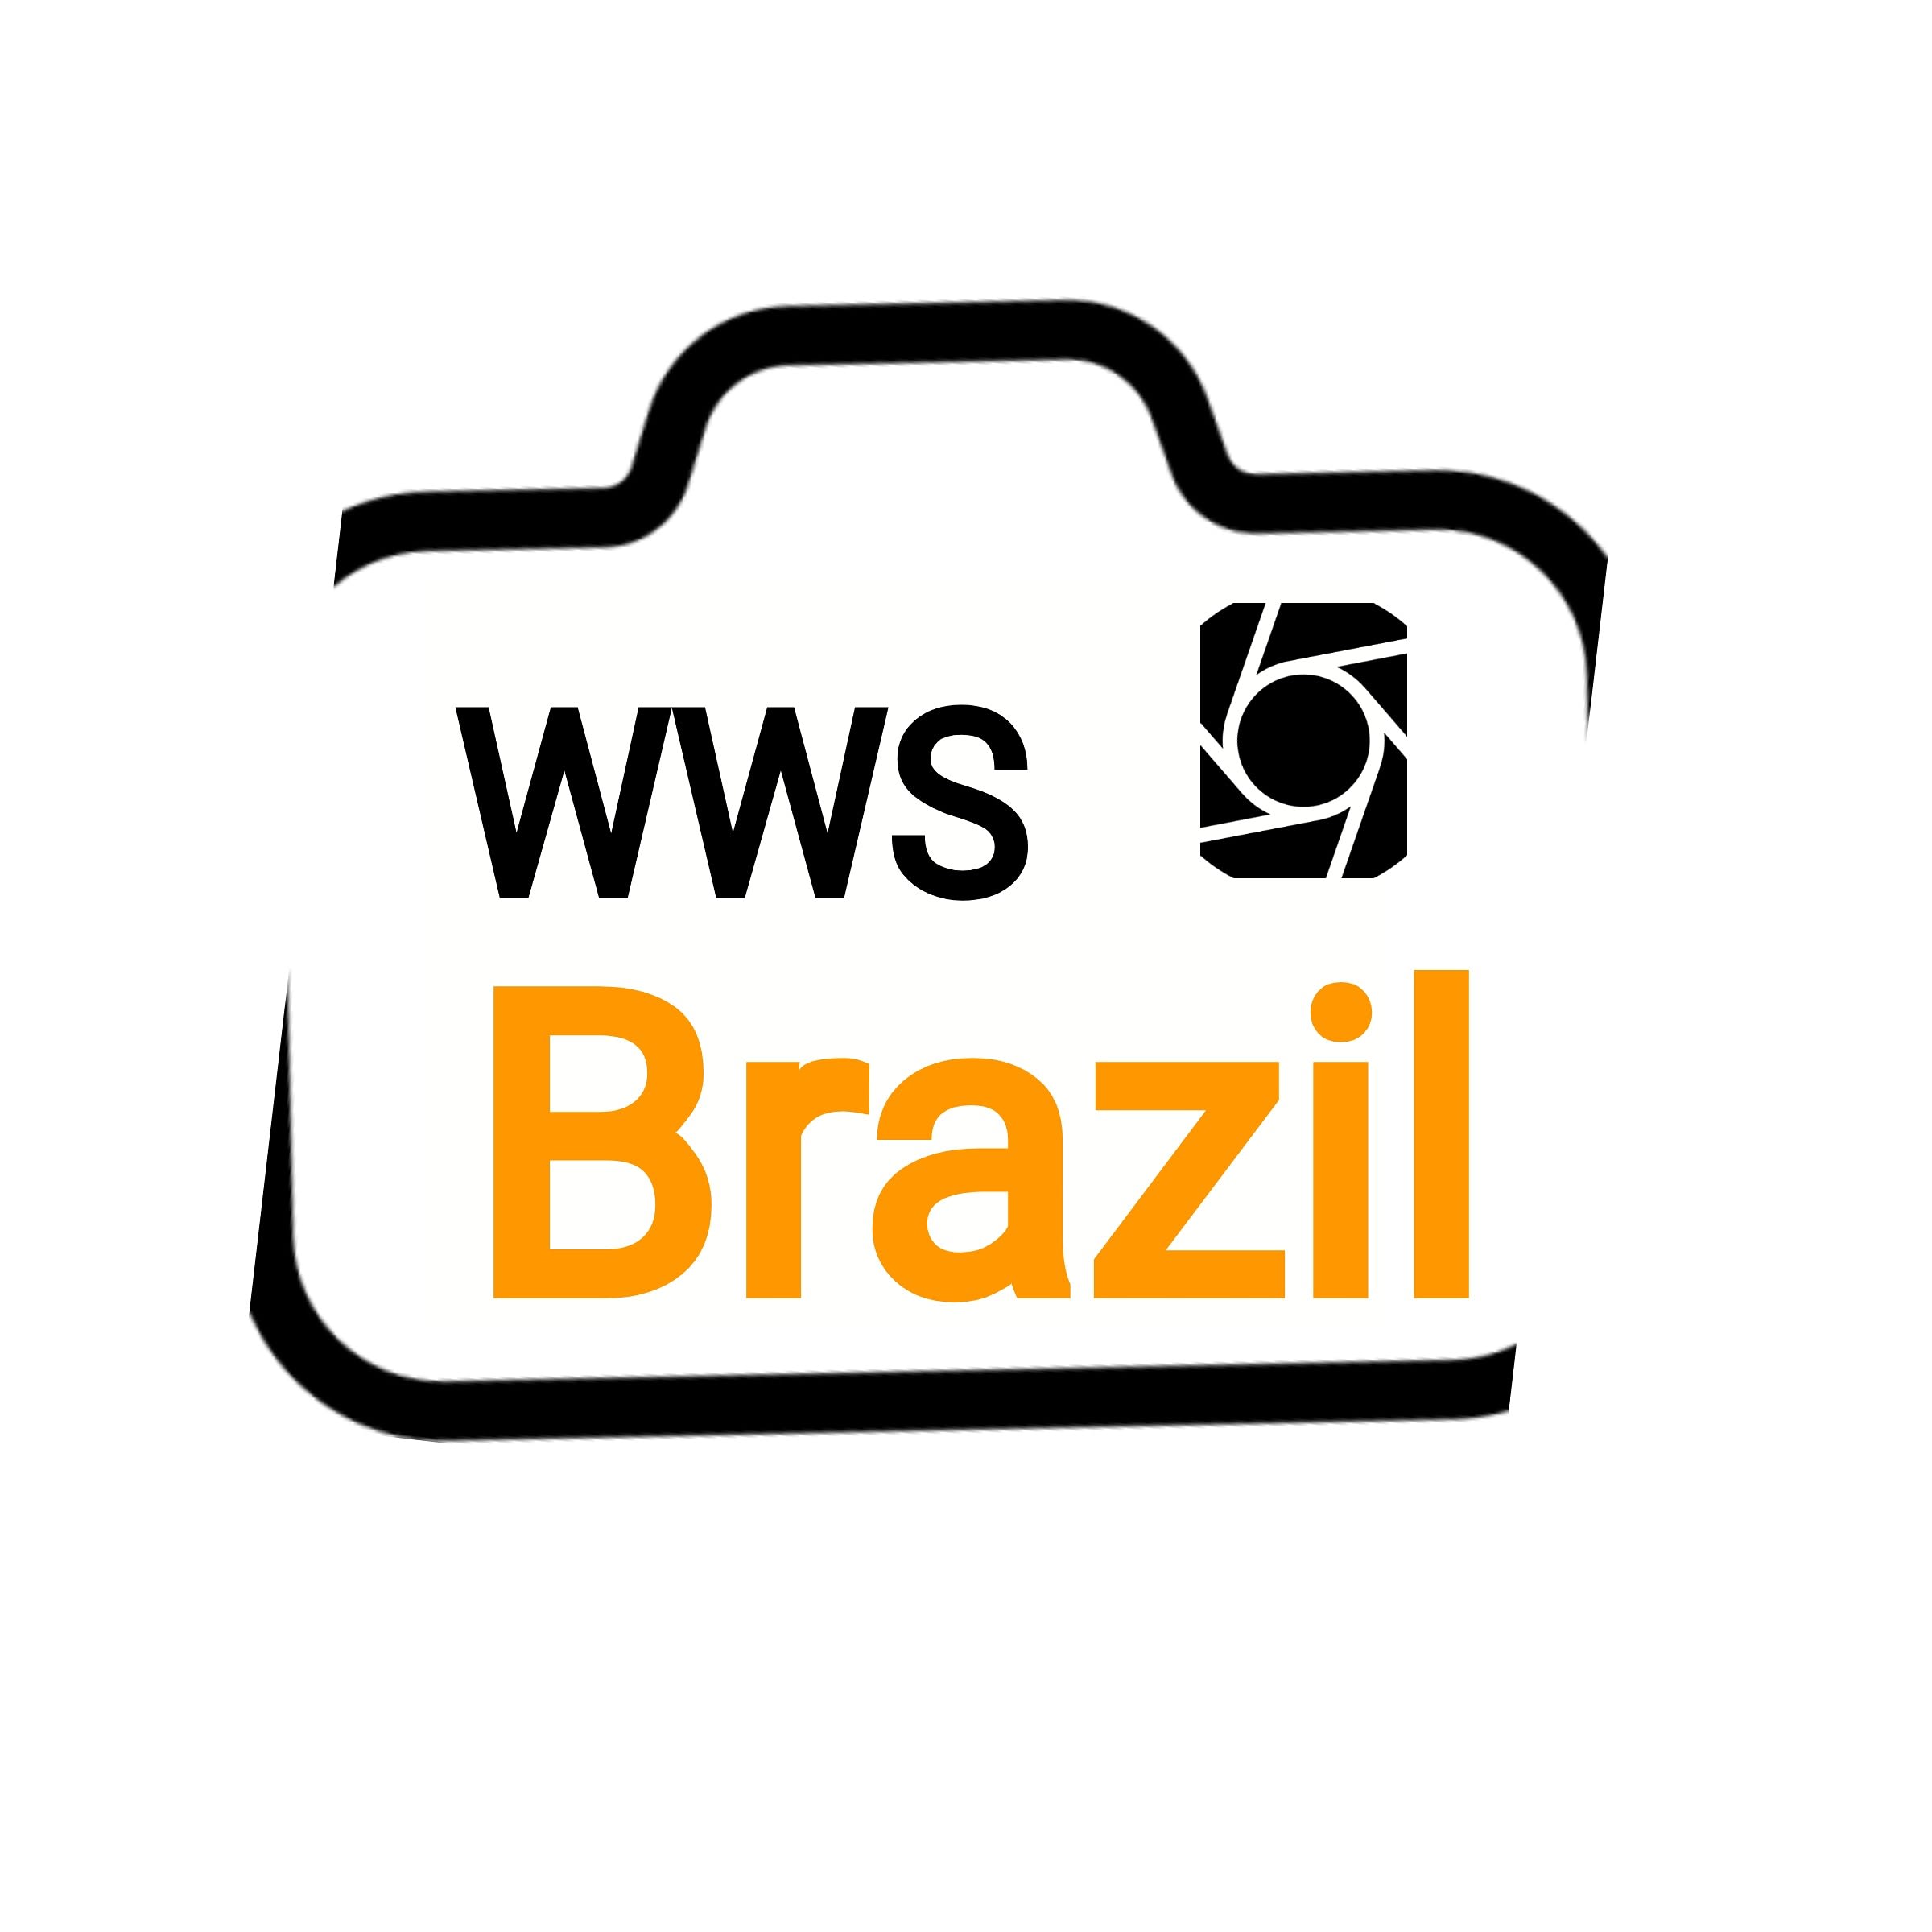 WWS Brazil